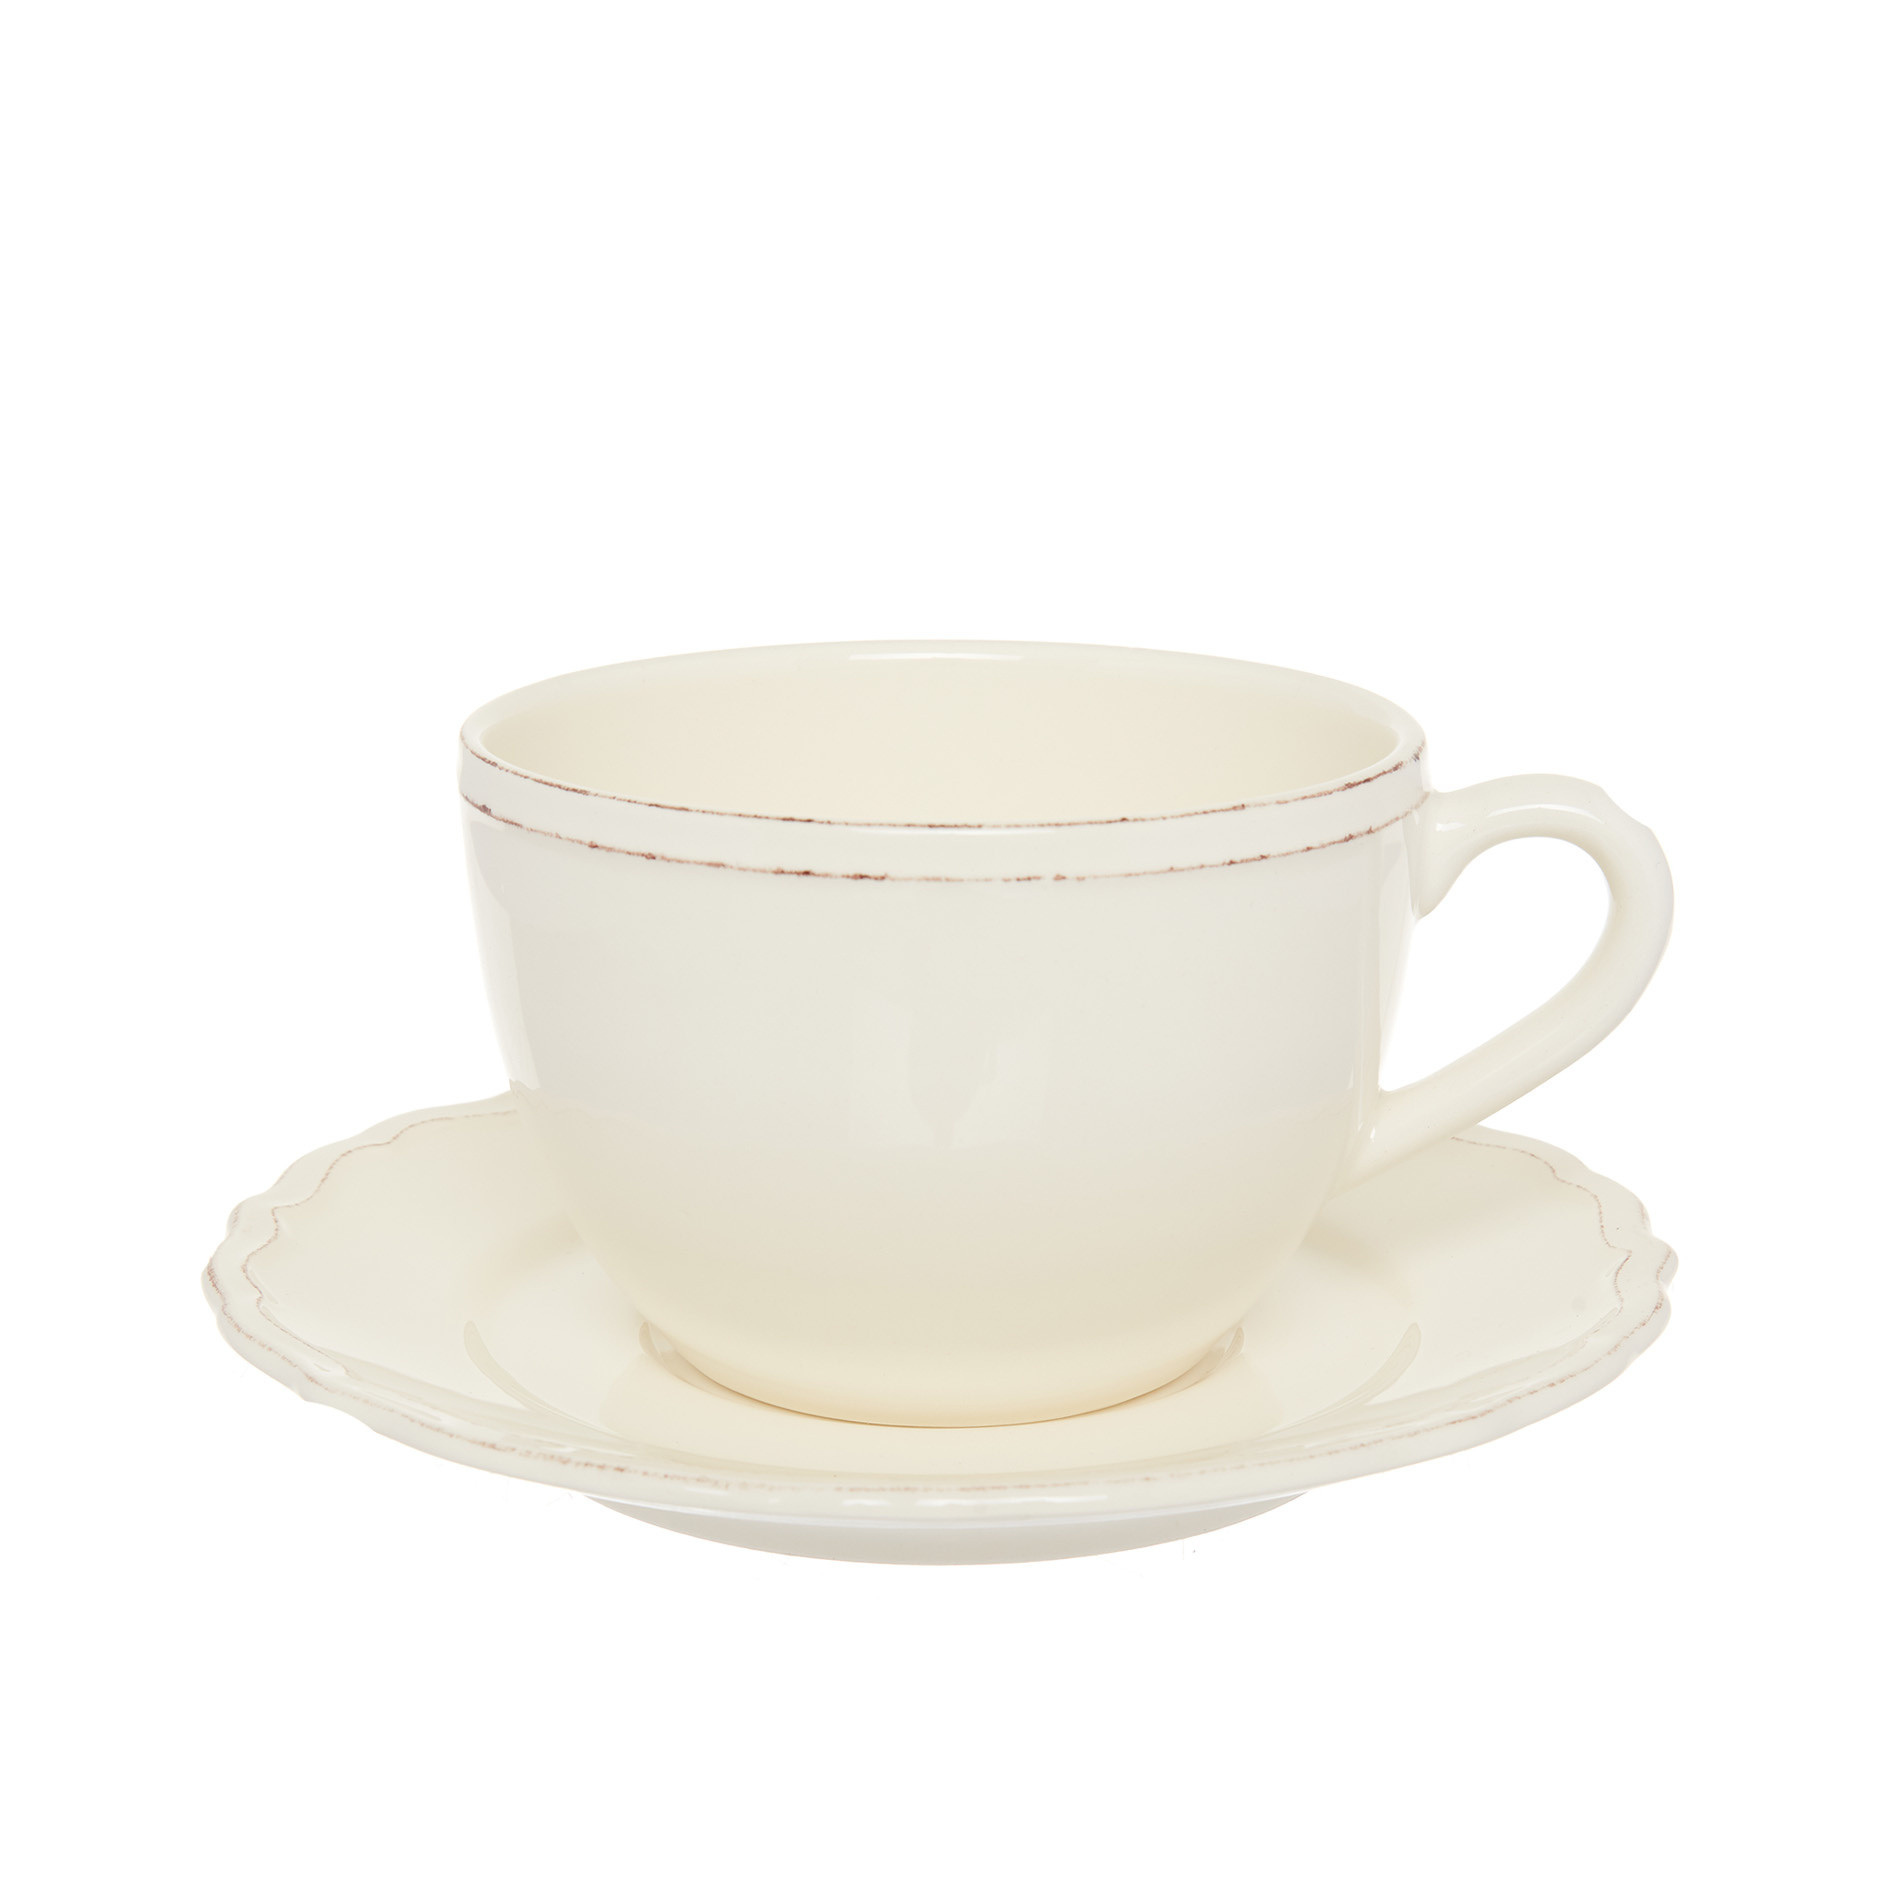 Dona Maria ceramic breakfast bowl, White Cream, large image number 0